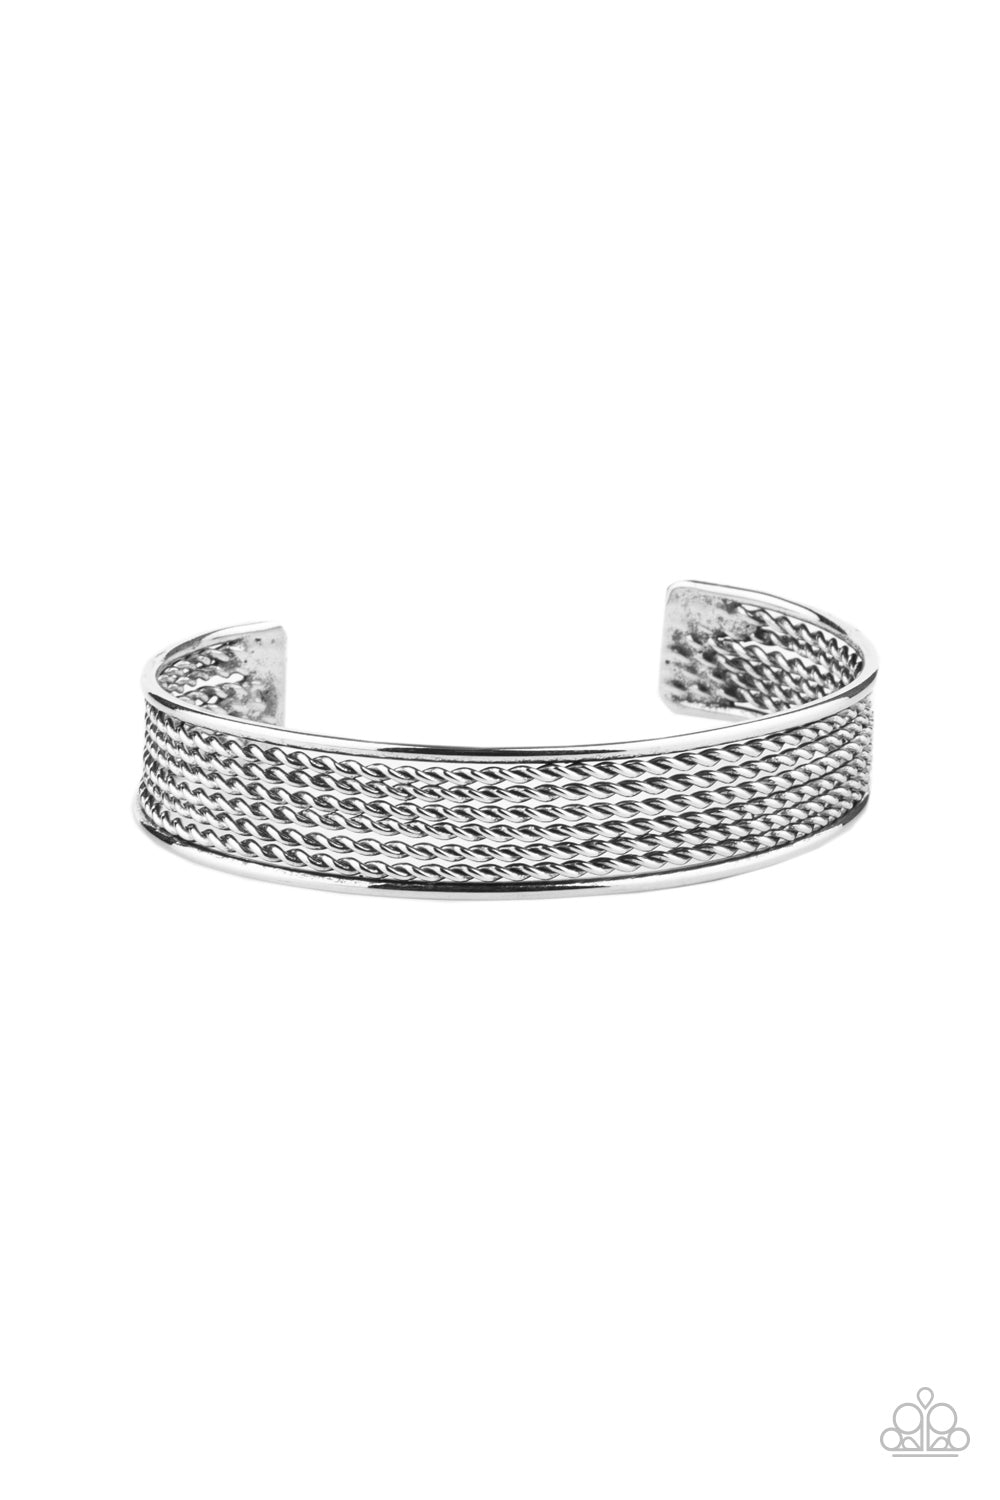 Paparazzi Risk-Taking Texture - Silver Bracelet